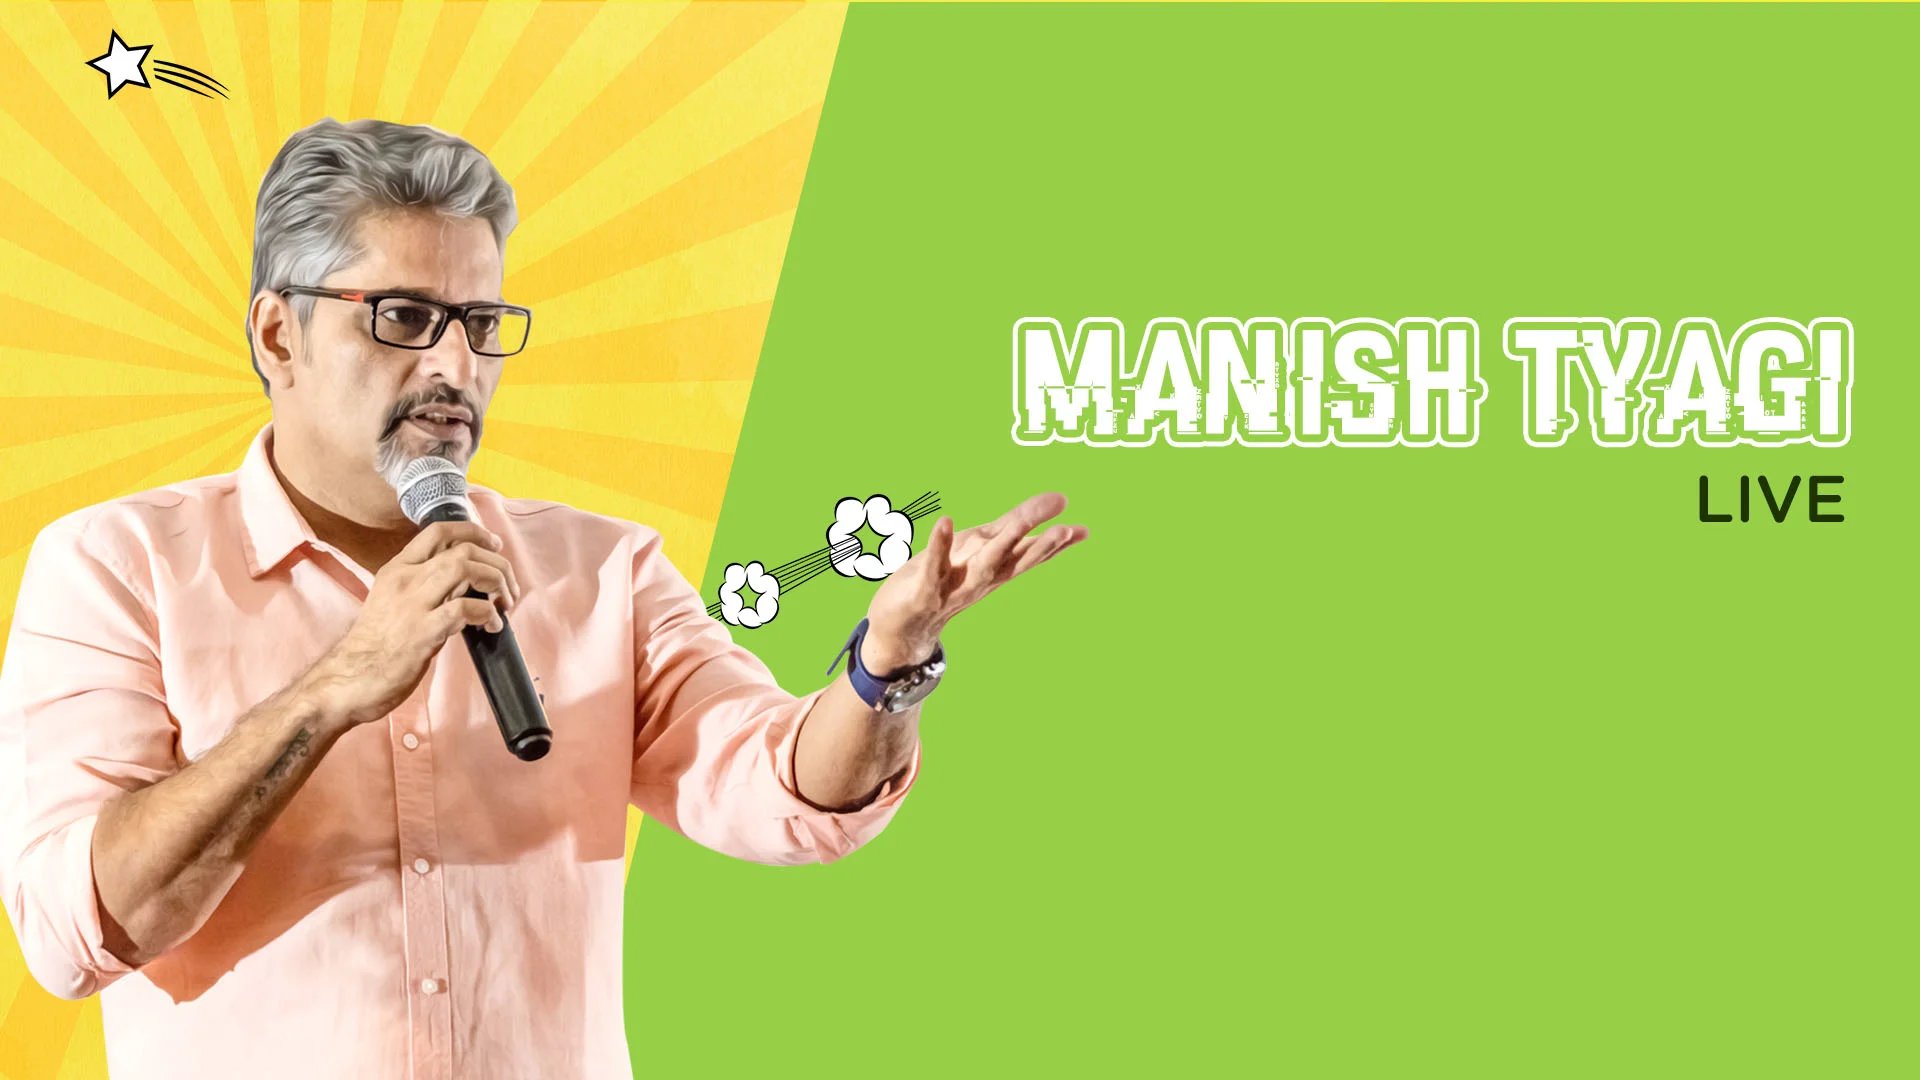 Manish Tyagi Live Public Speaking HD Wallpaper Background